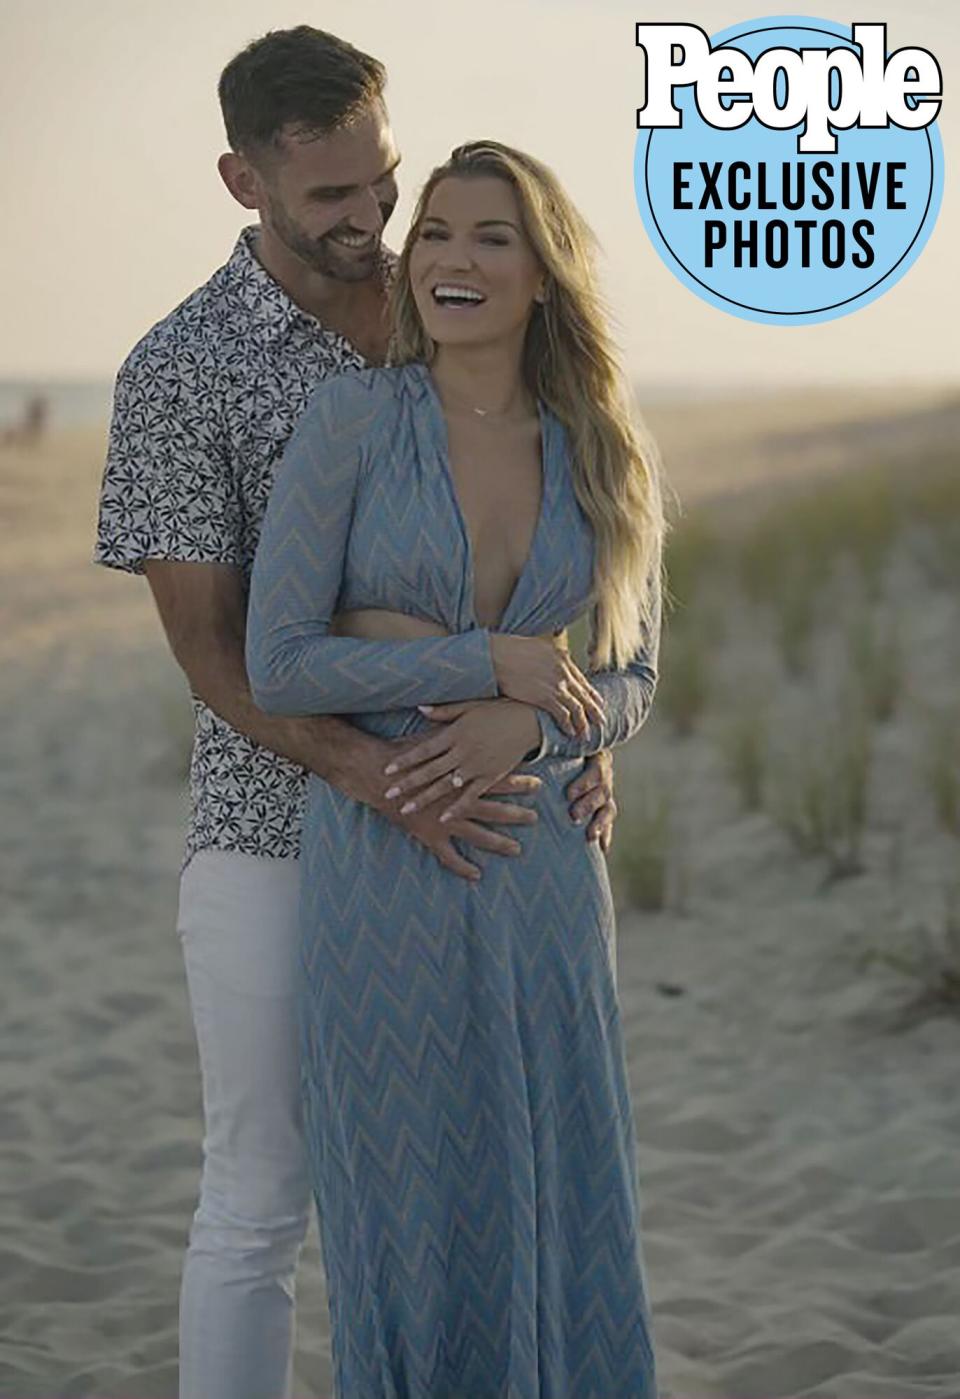 Summer House Stars Lindsay Hubbard and Carl Radke Are Engaged After Romantic Beachside Proposal — See Her Ring. Phot credit: Adam Szulewski, Olga Lezhepekova